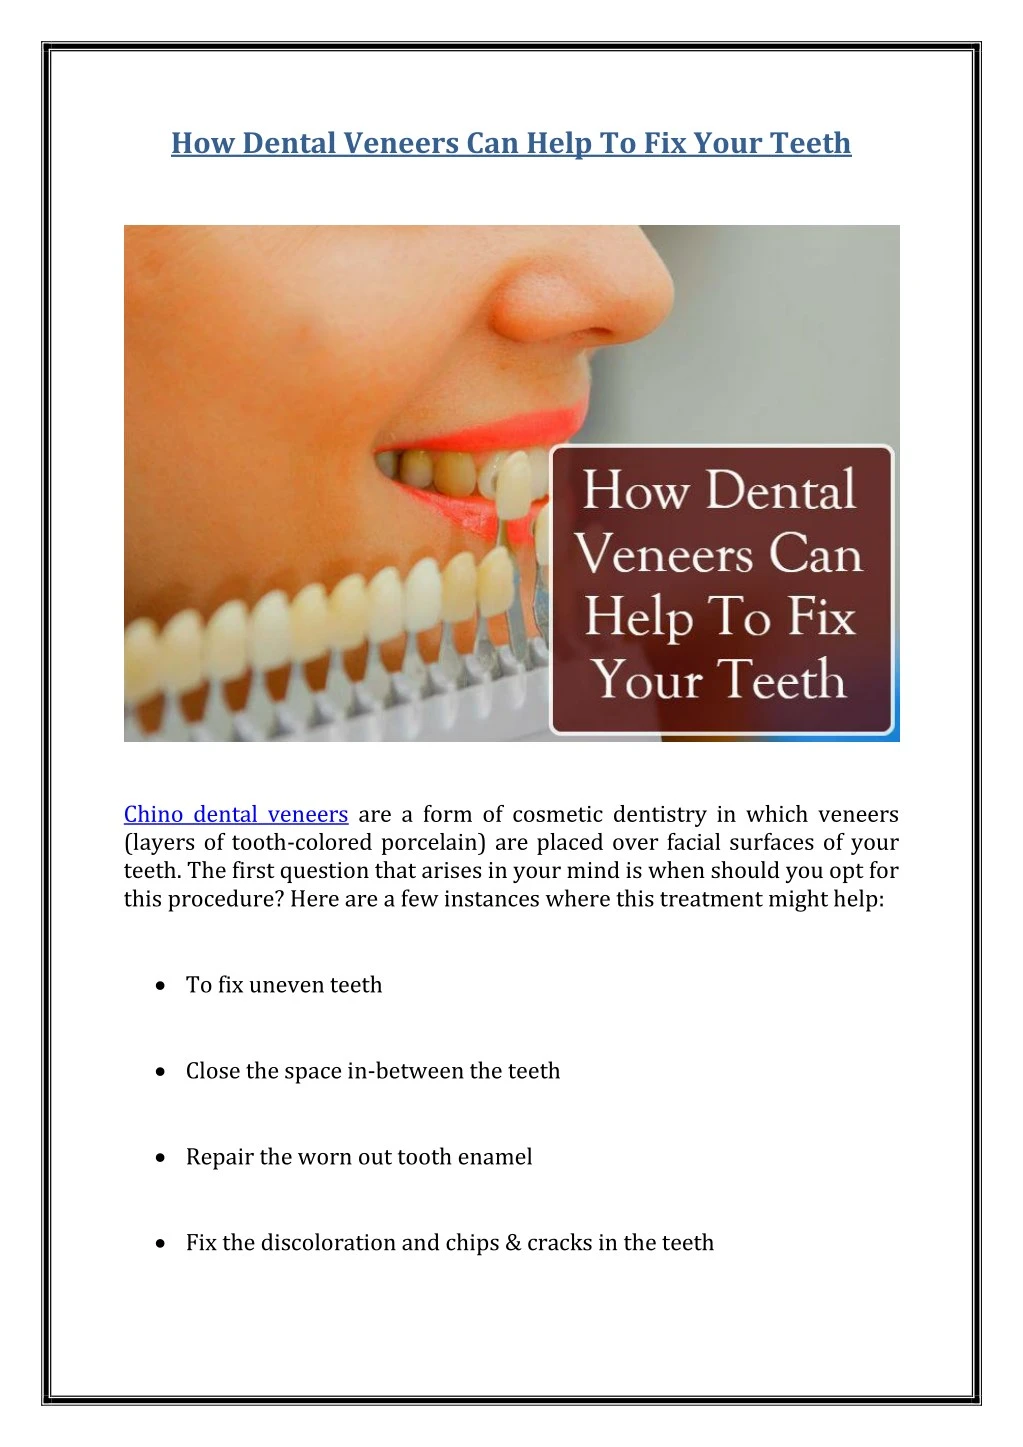 how dental veneers can help to fix your teeth